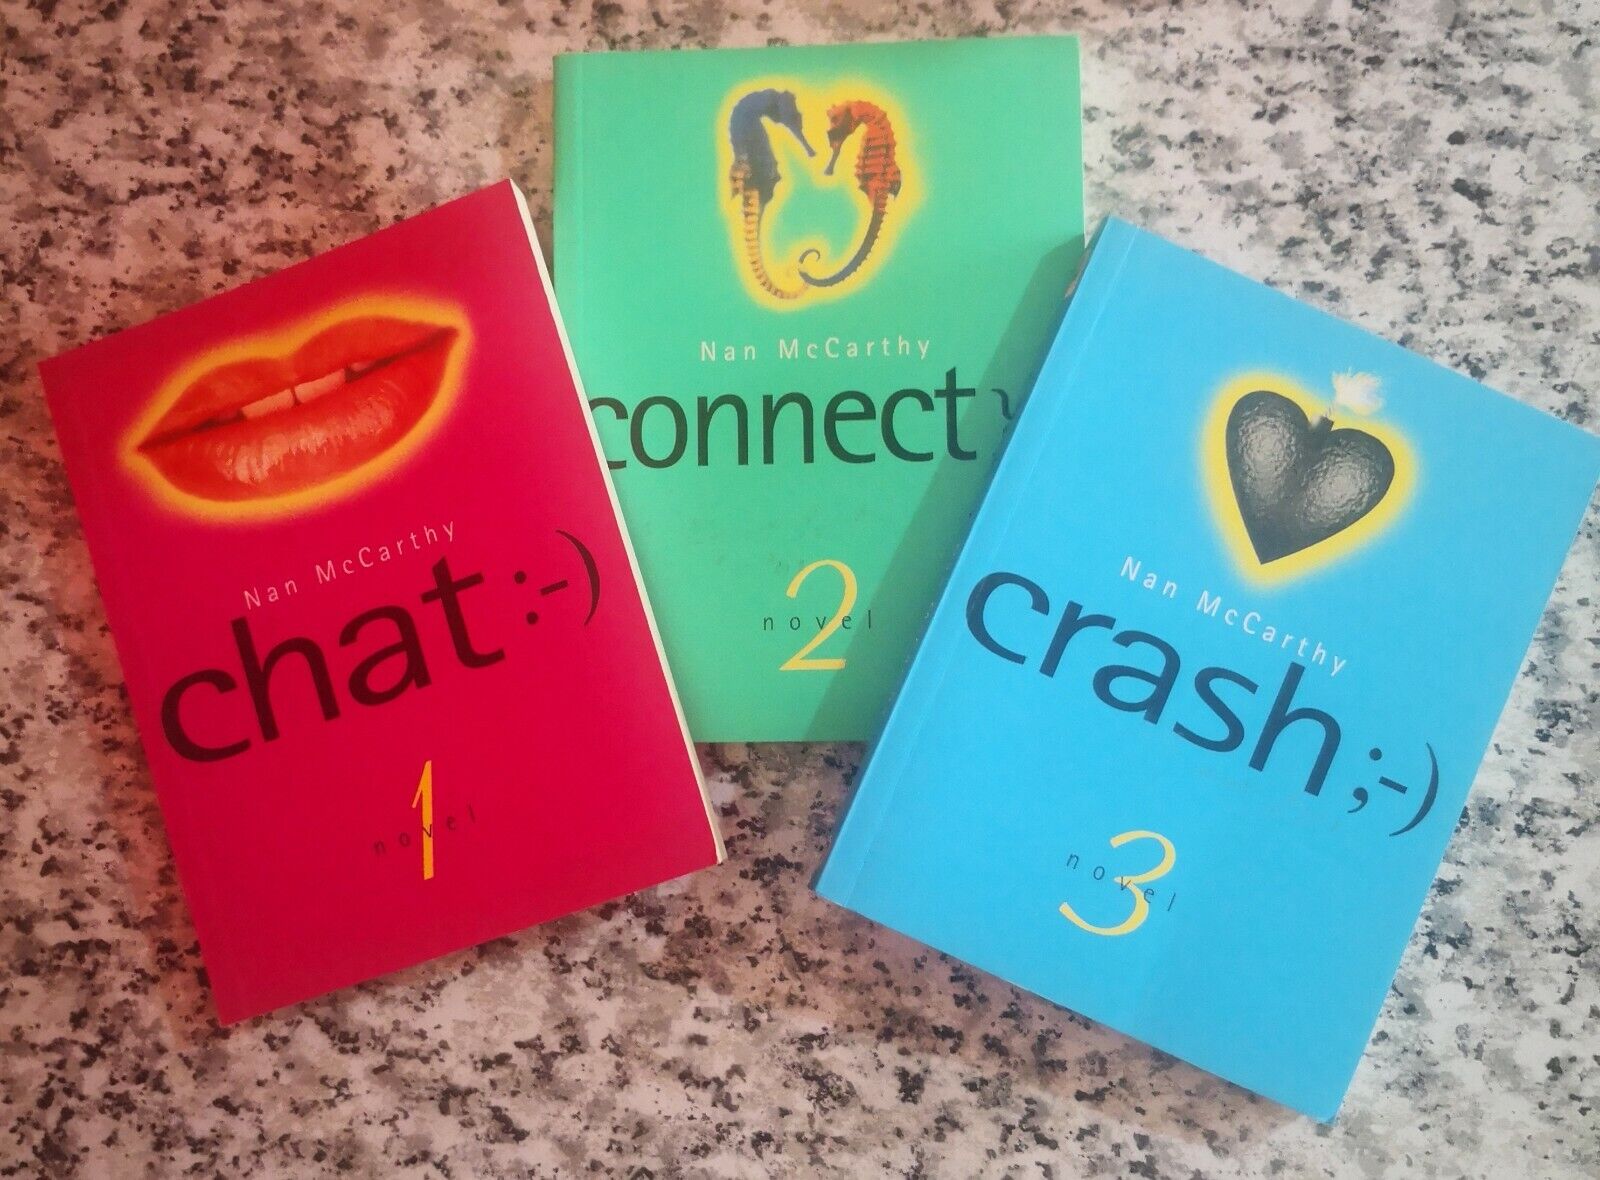  Nan McCarthy , Chat 1 , connect 2 , Crash 3  di A.a.v.v,  1992,  Novel -F